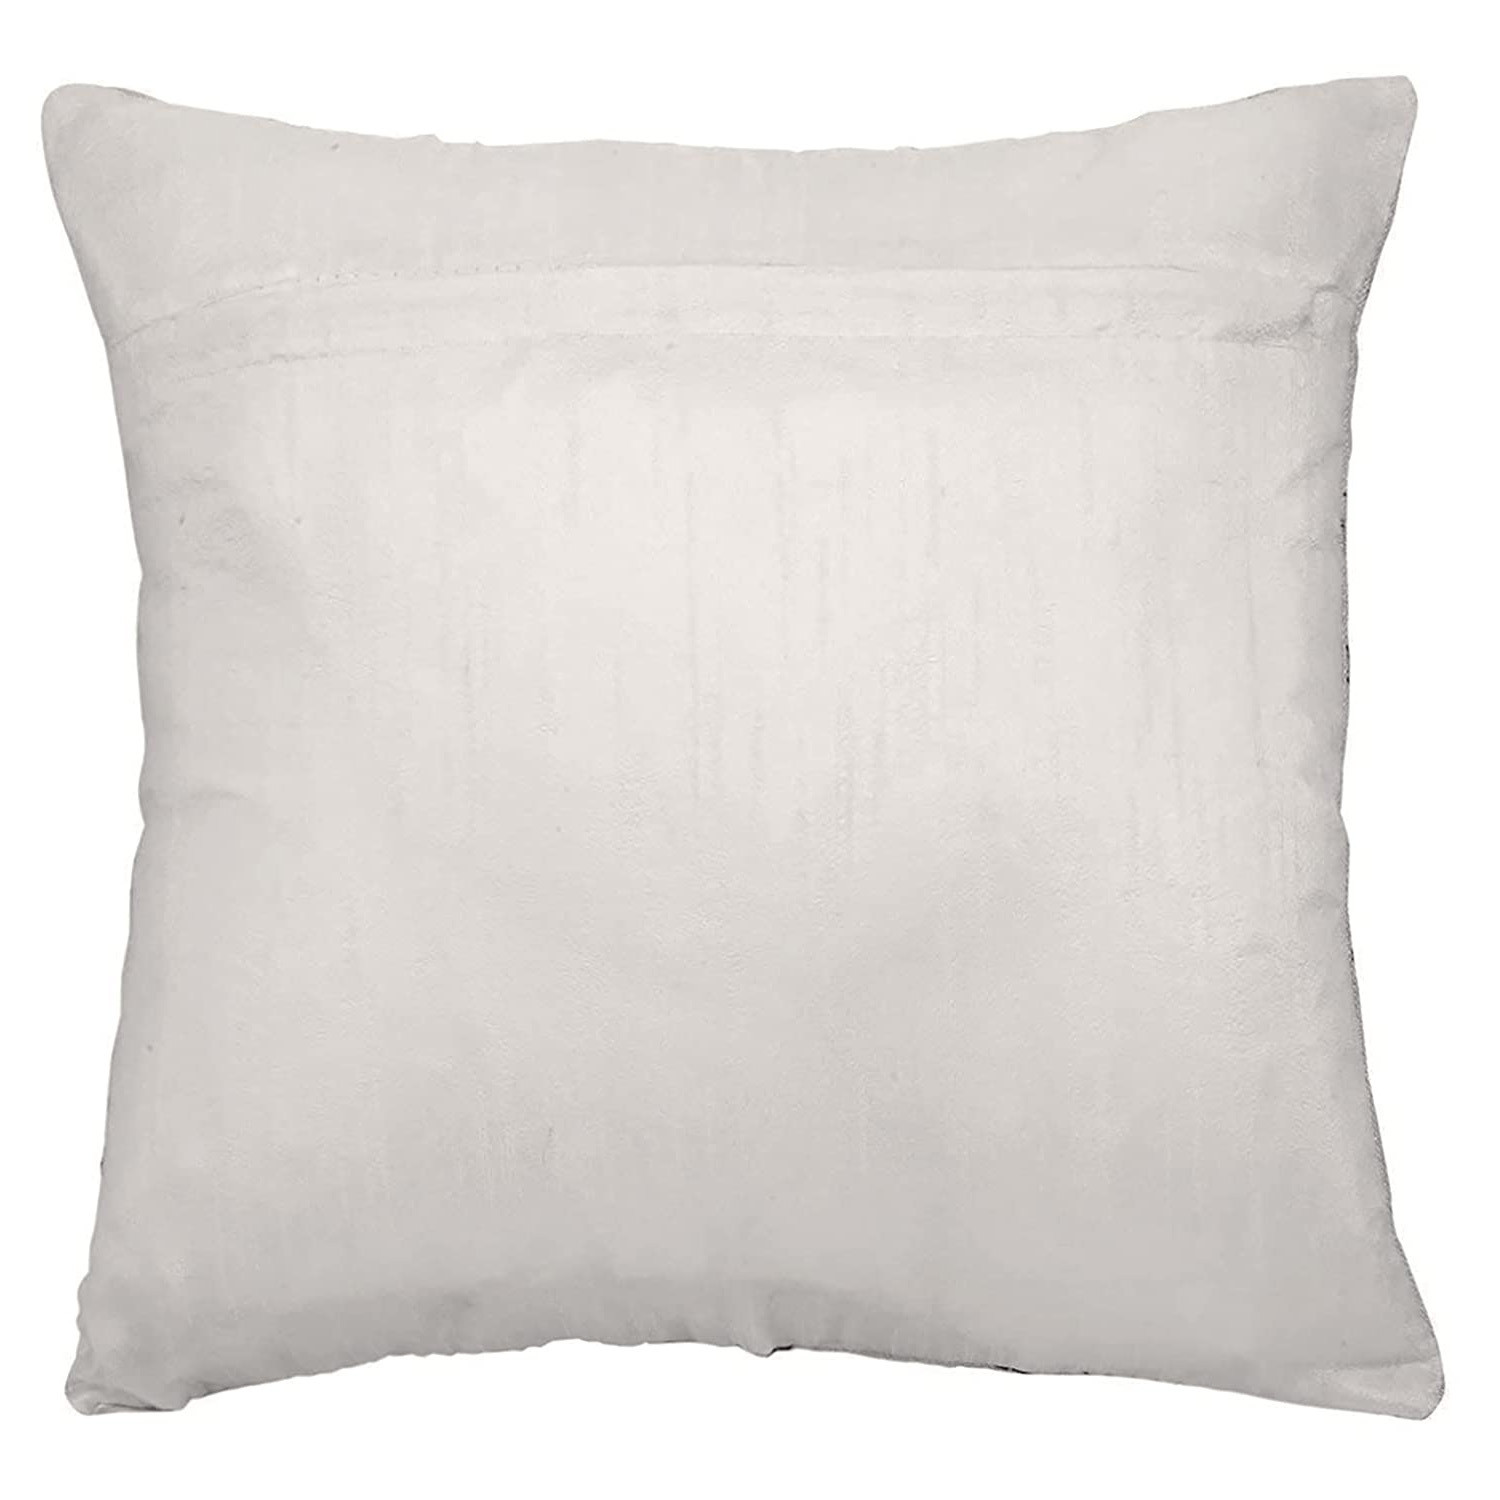 Kuber Industries Cushion Cover|Sofa Cushion Covers|Ractangle Cushion Covers|Cushion Covers 16 inch x 16 inch|Cushion Cover Set of 5 (White)